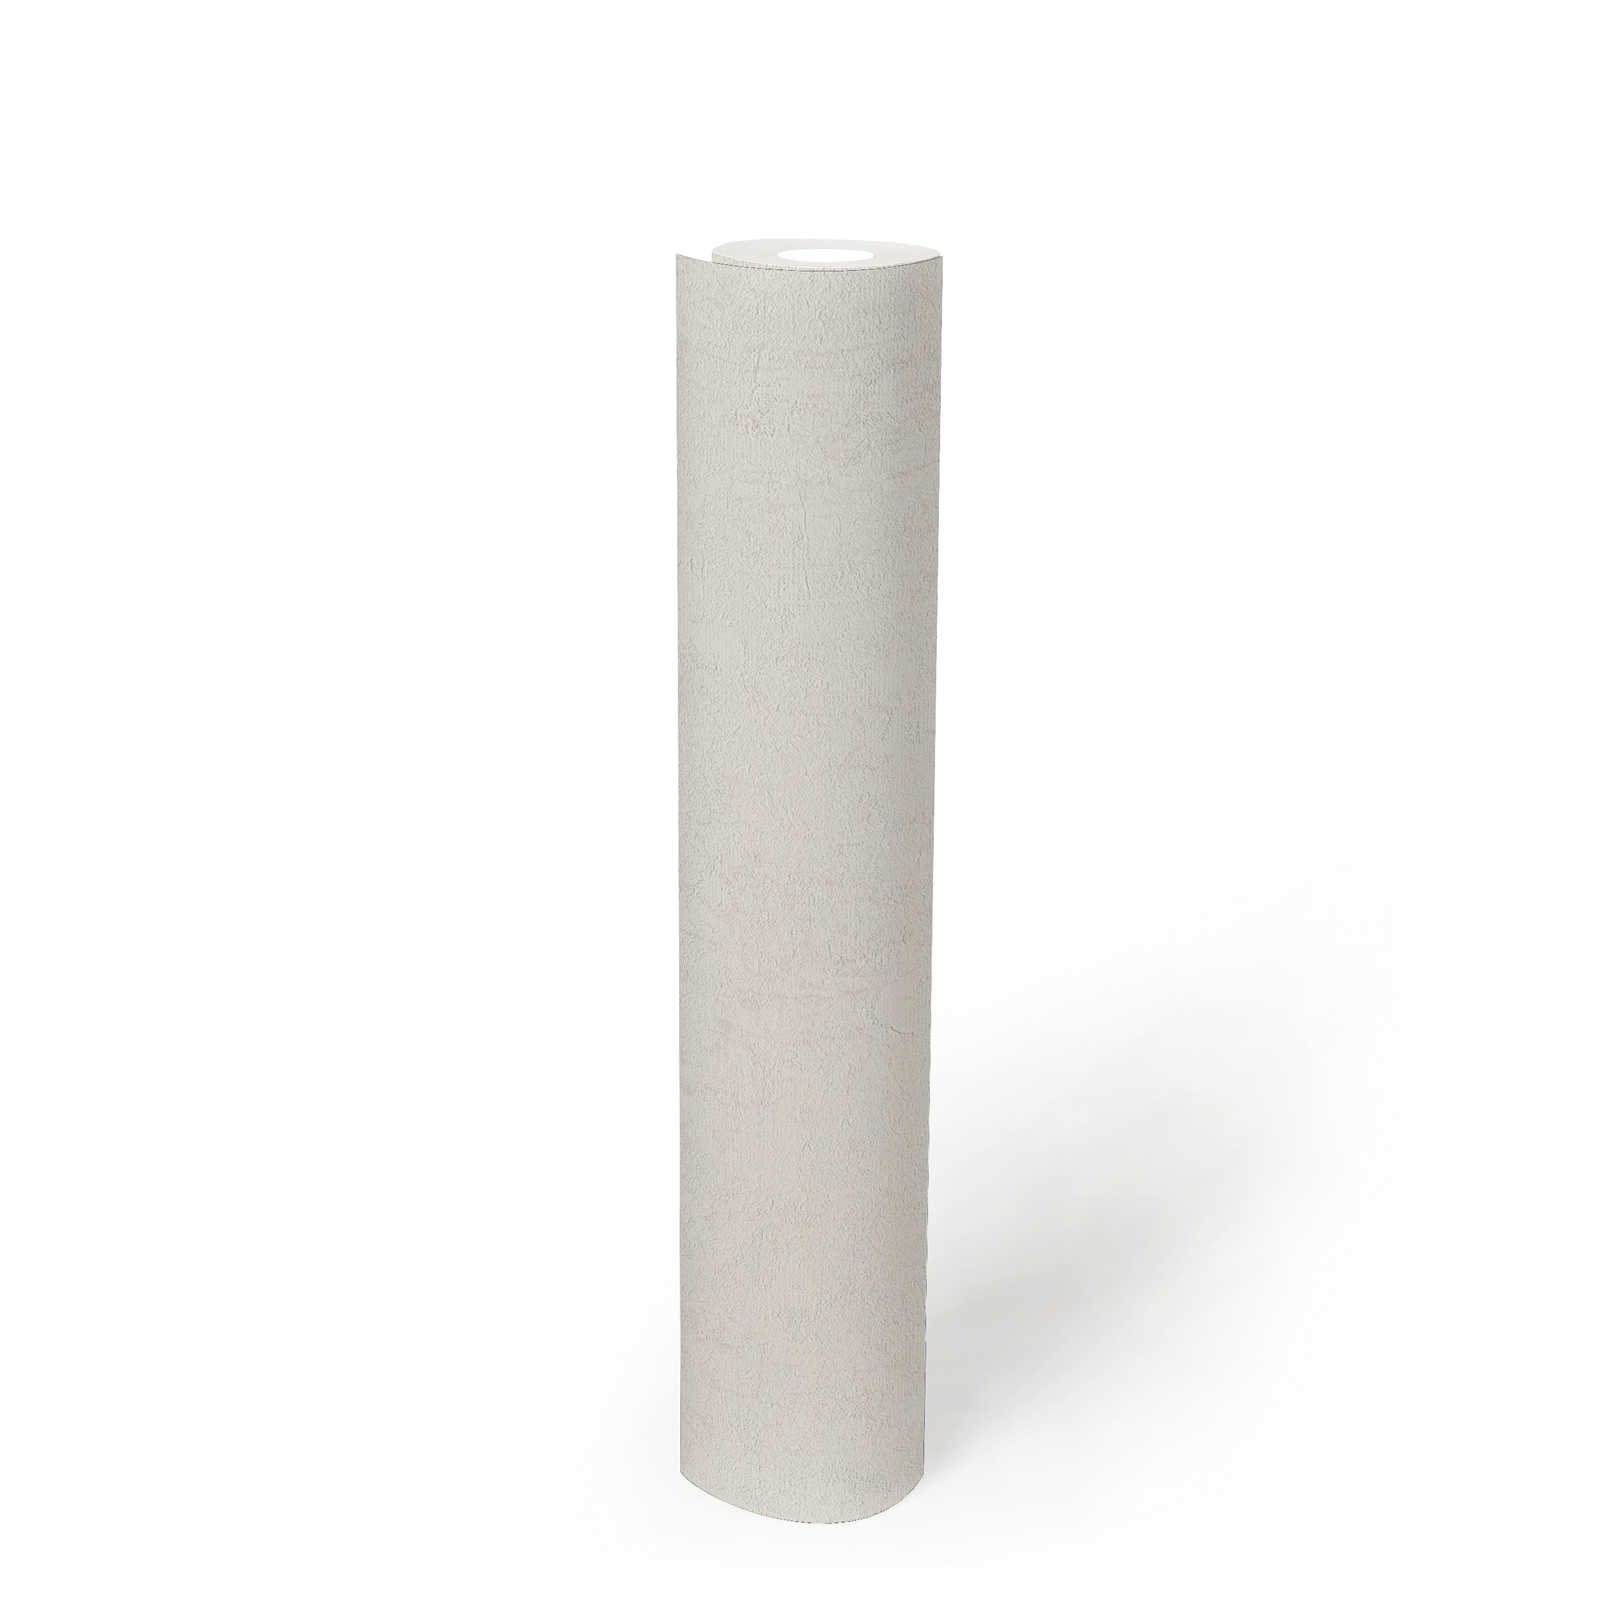             Plaster optics wallpaper cream white with used design - metallic, white
        